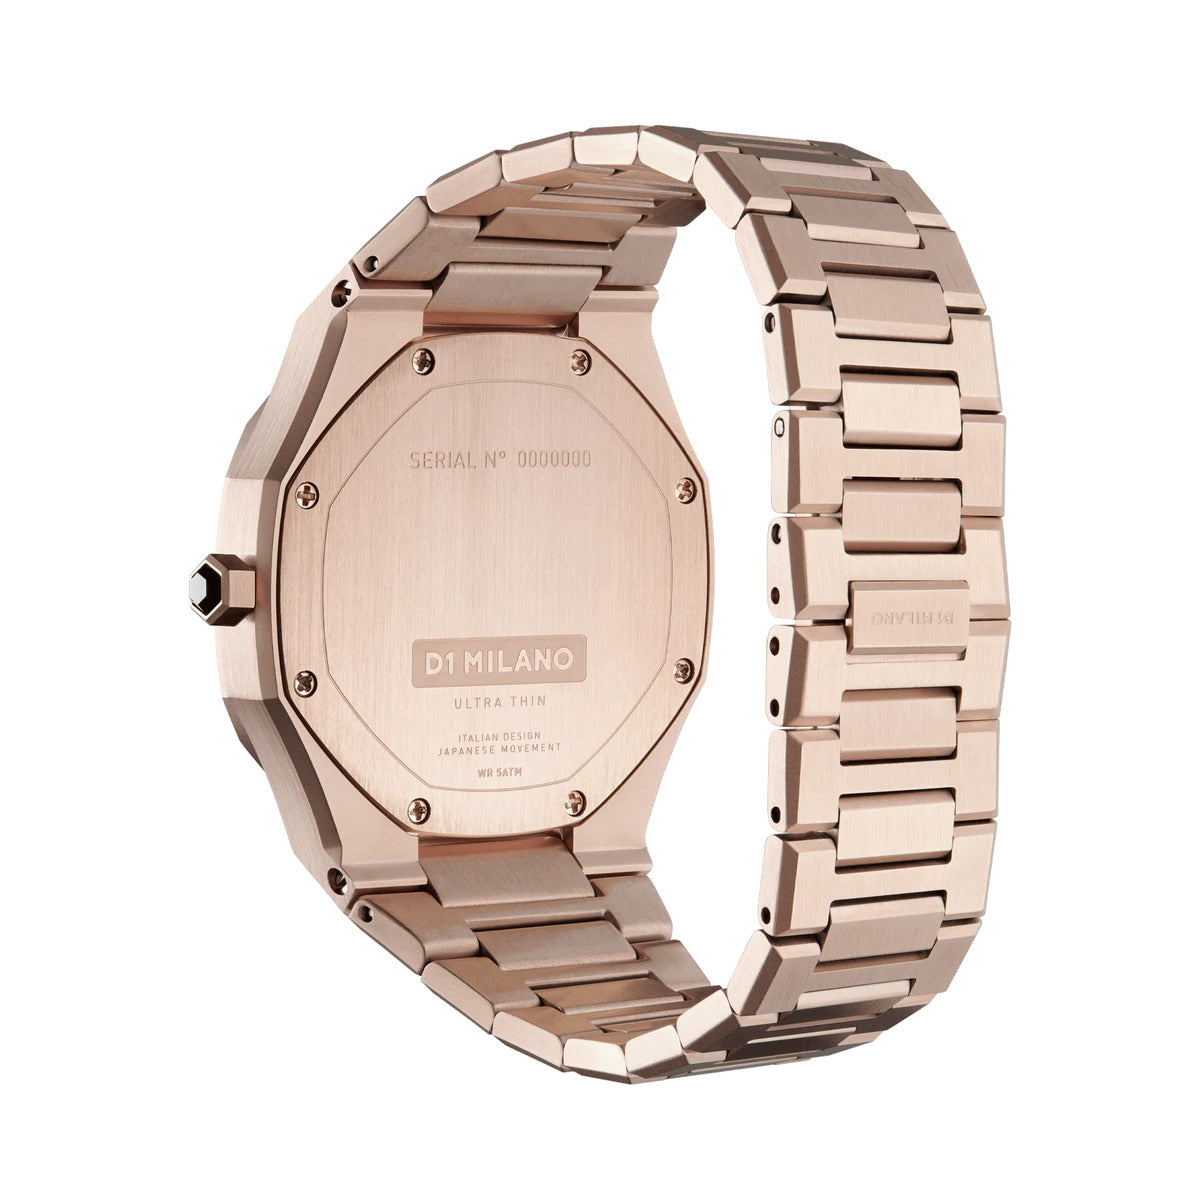 D1 Milano Men's and Women's Quartz Watch, Silver Dial - ML-0186